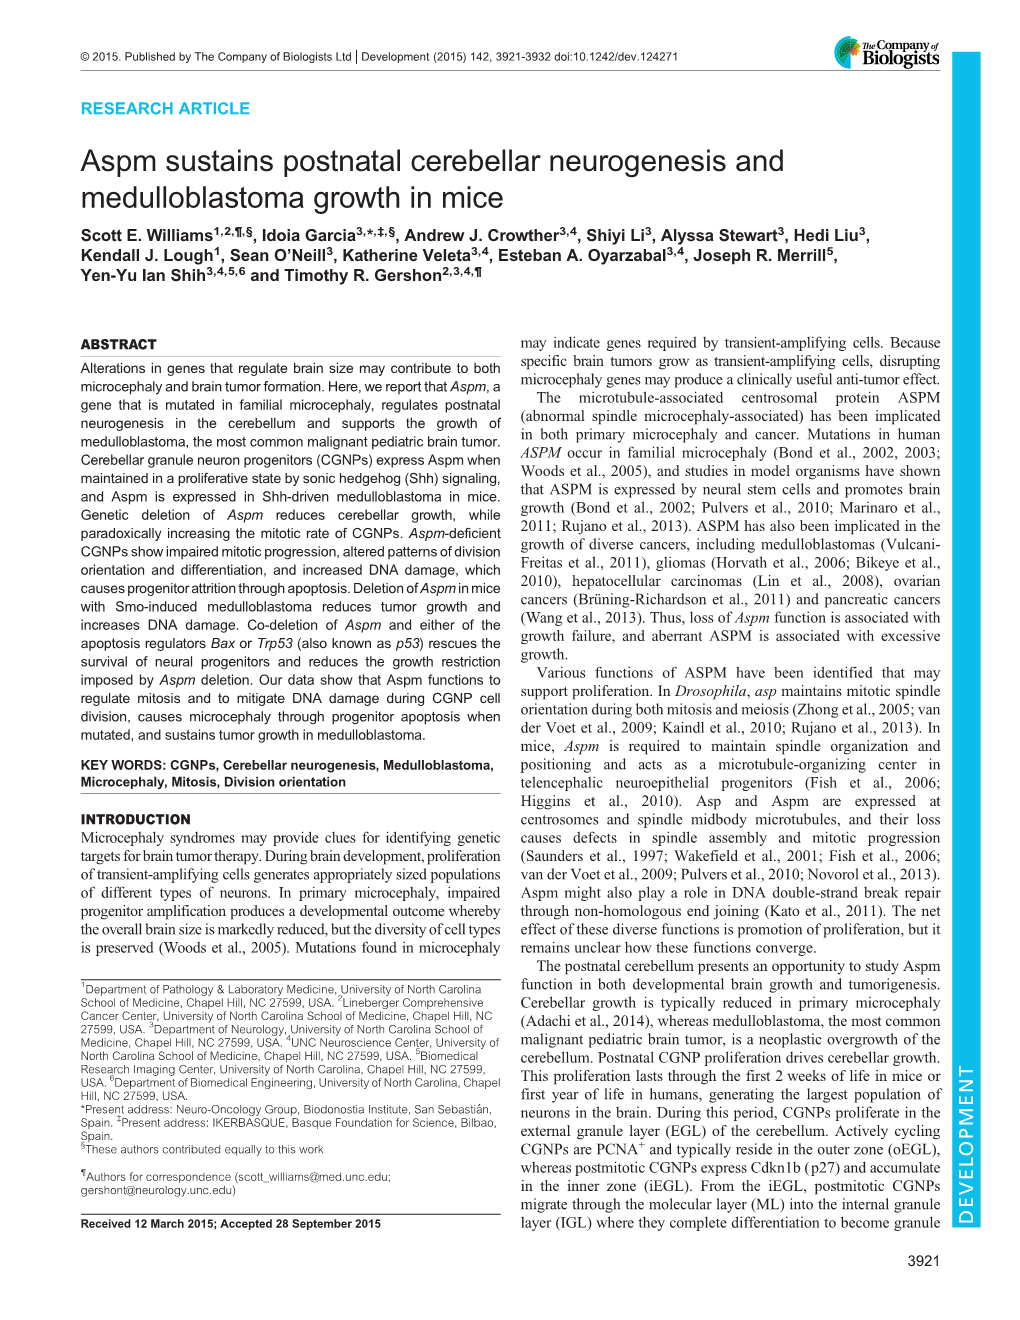 Aspm Sustains Postnatal Cerebellar Neurogenesis and Medulloblastoma Growth in Mice Scott E